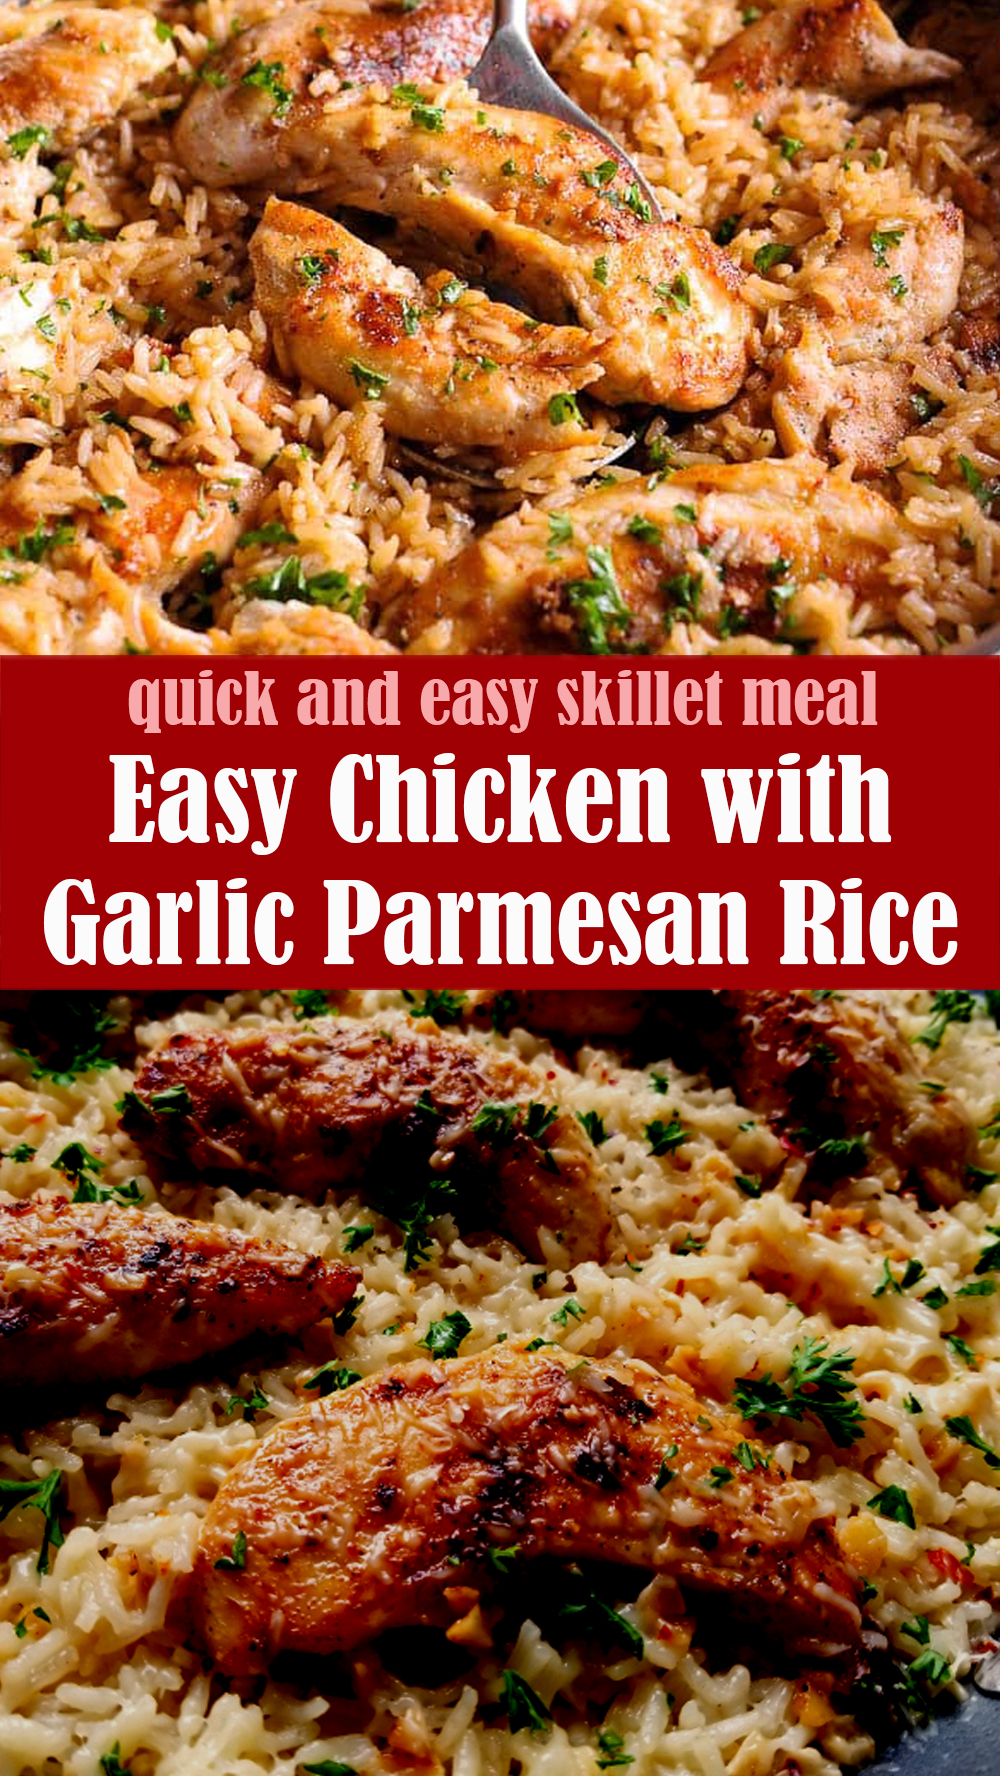 Easy Chicken with Garlic Parmesan Rice